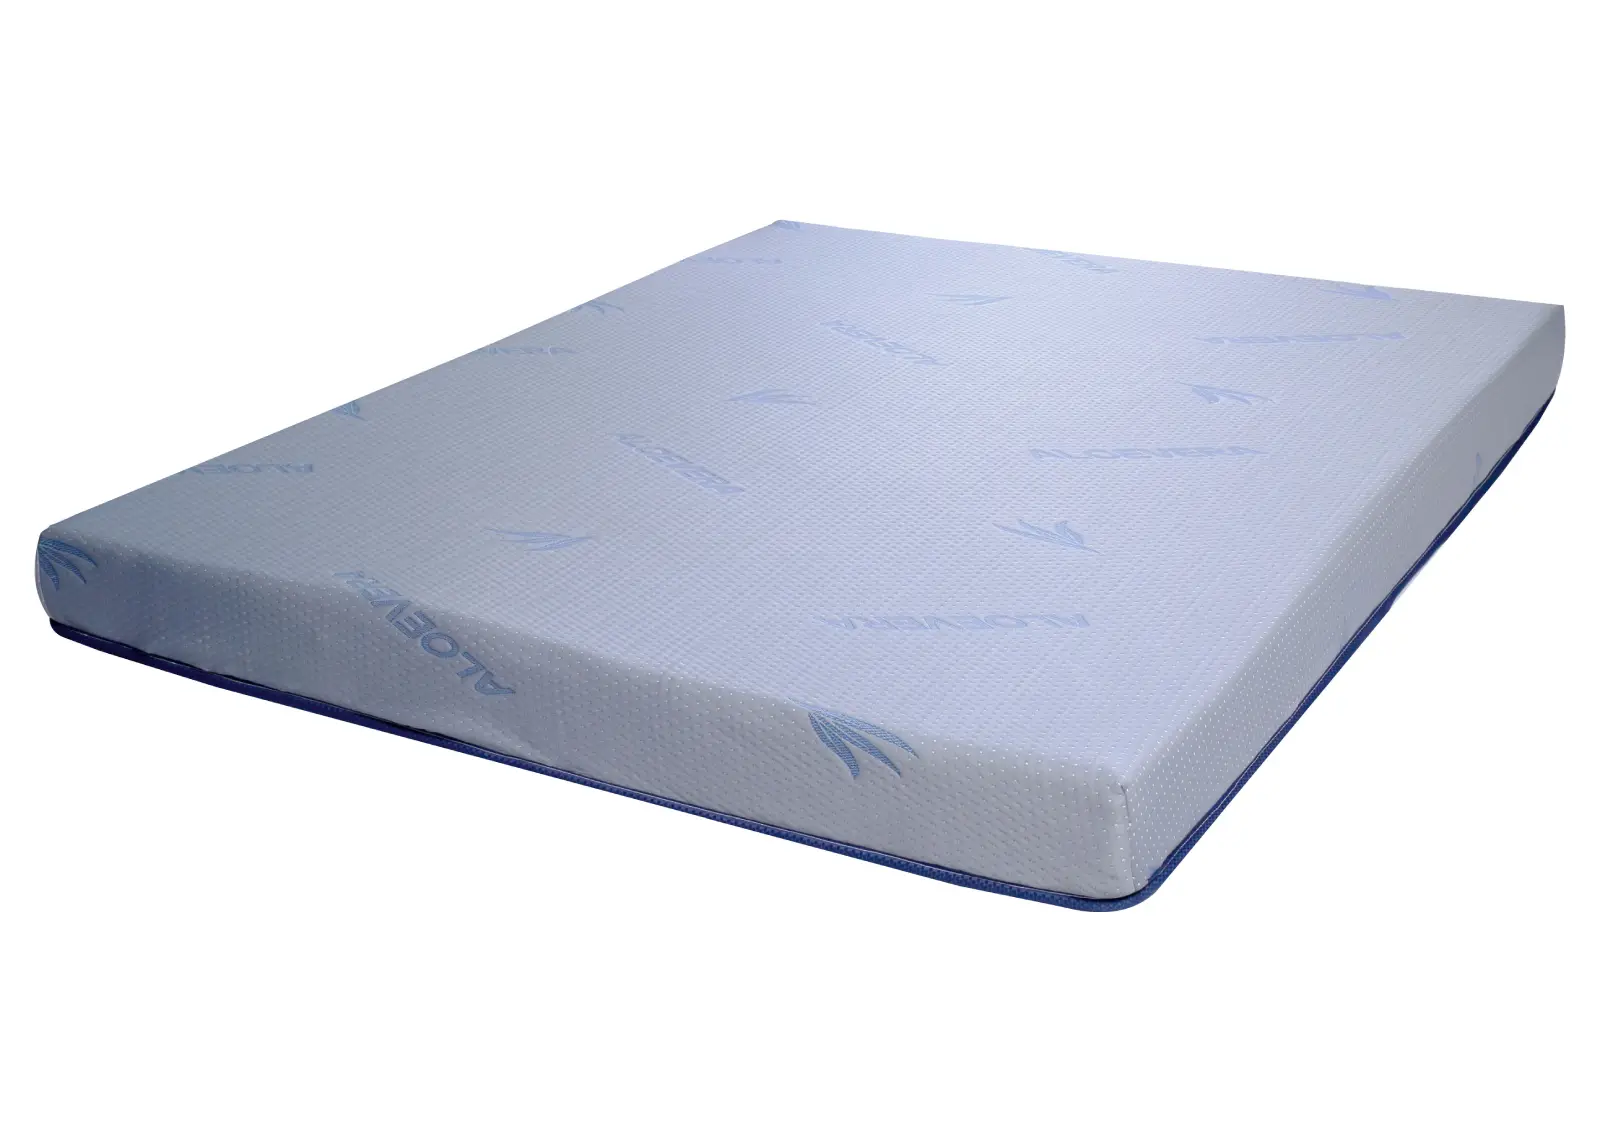 Solace Plush mattress manufacturers in Kerala